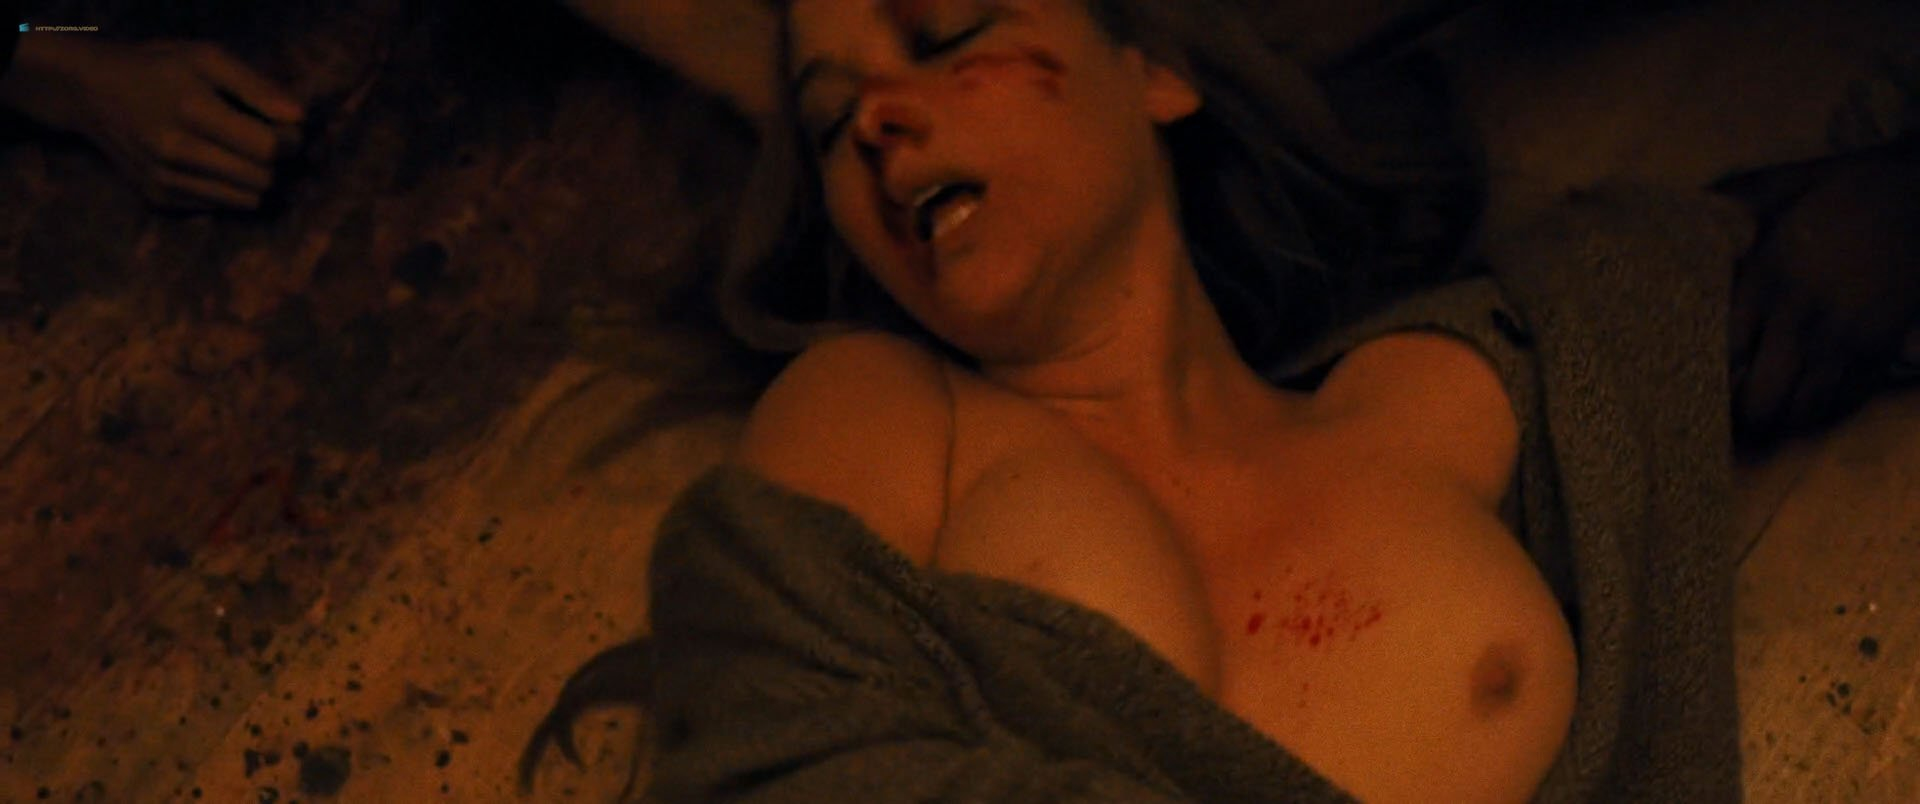 Jennifer lawrence nude scene